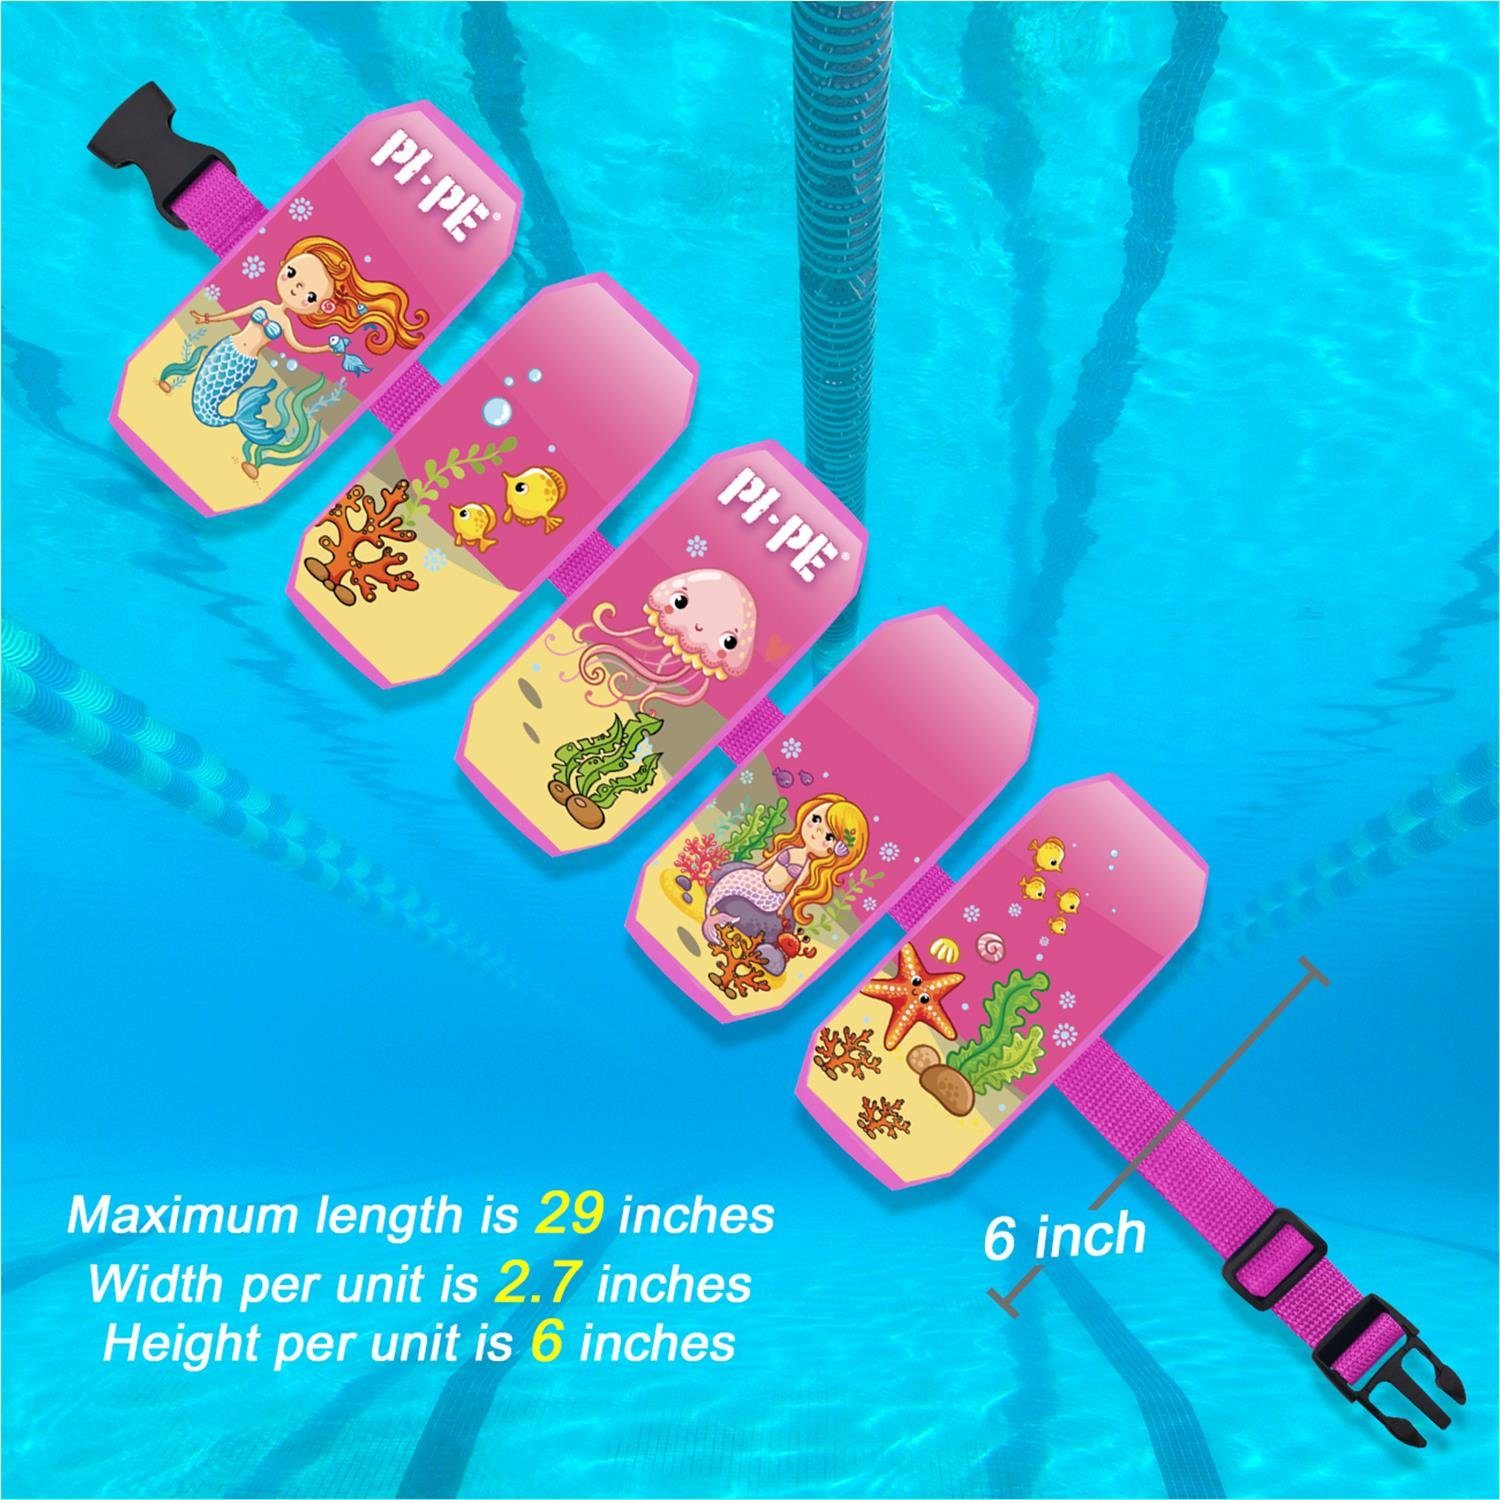 Kinder PI-PE Schwimmgürtel rosa PI-PE Pro Schwimmweste